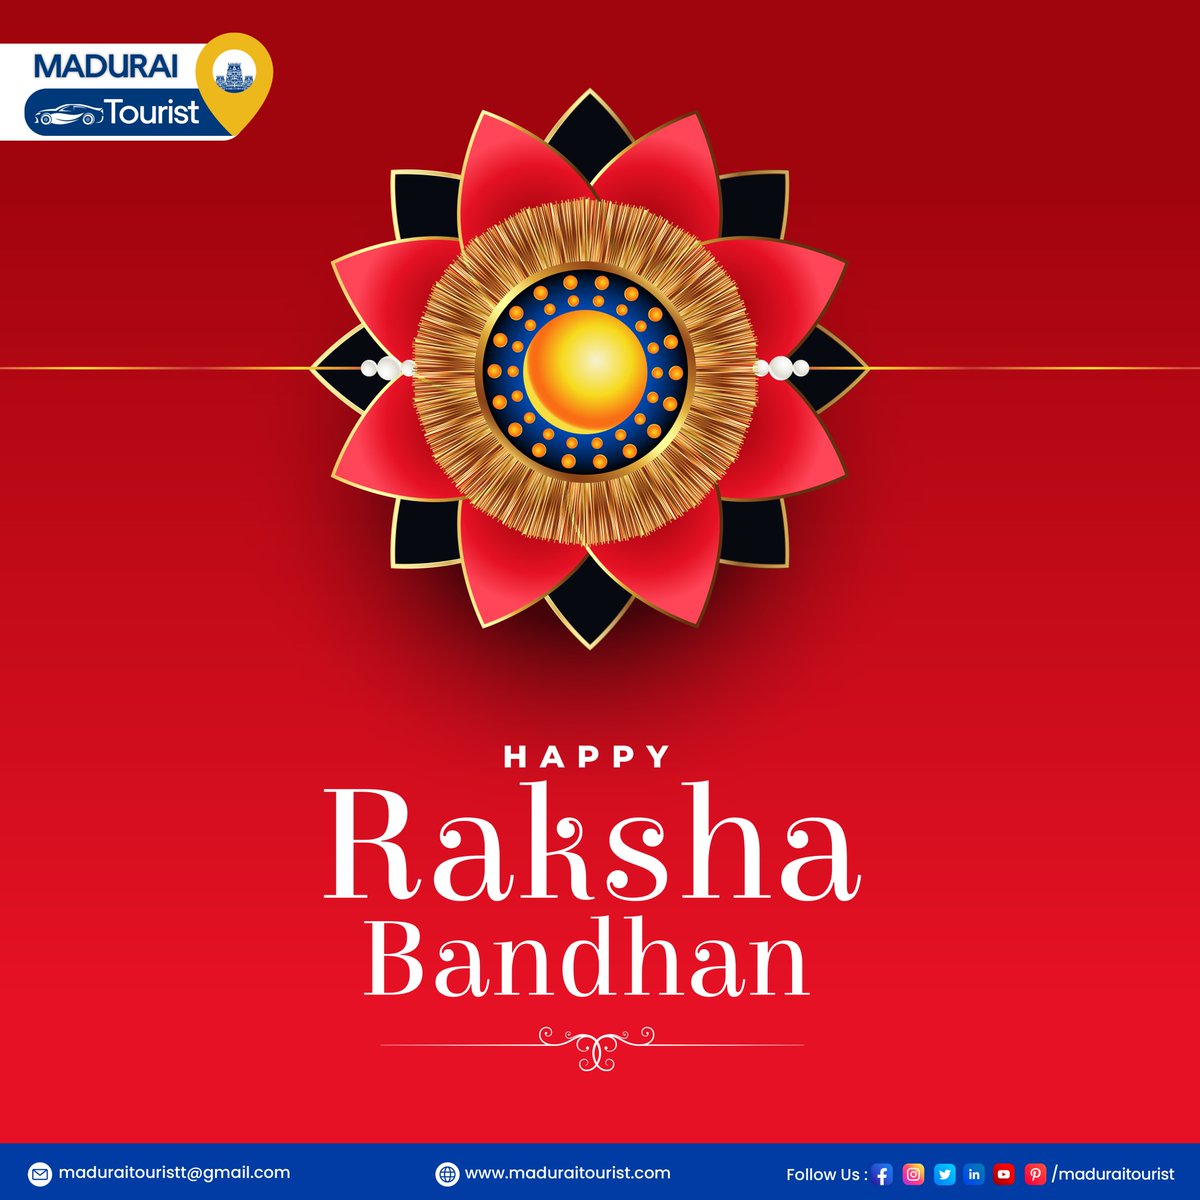 🎉 Sending warm Raksha Bandhan greetings to you and your sibling! May you have a wonderful festive time. 🥰🎊 #HappyRakshaBandhan #maduraitourist #letsconnect #SiblingLove #SiblingBond #SiblingConnection #RakhiLove #HappyRakhi #RakhiBond #rakshabandhanspecial